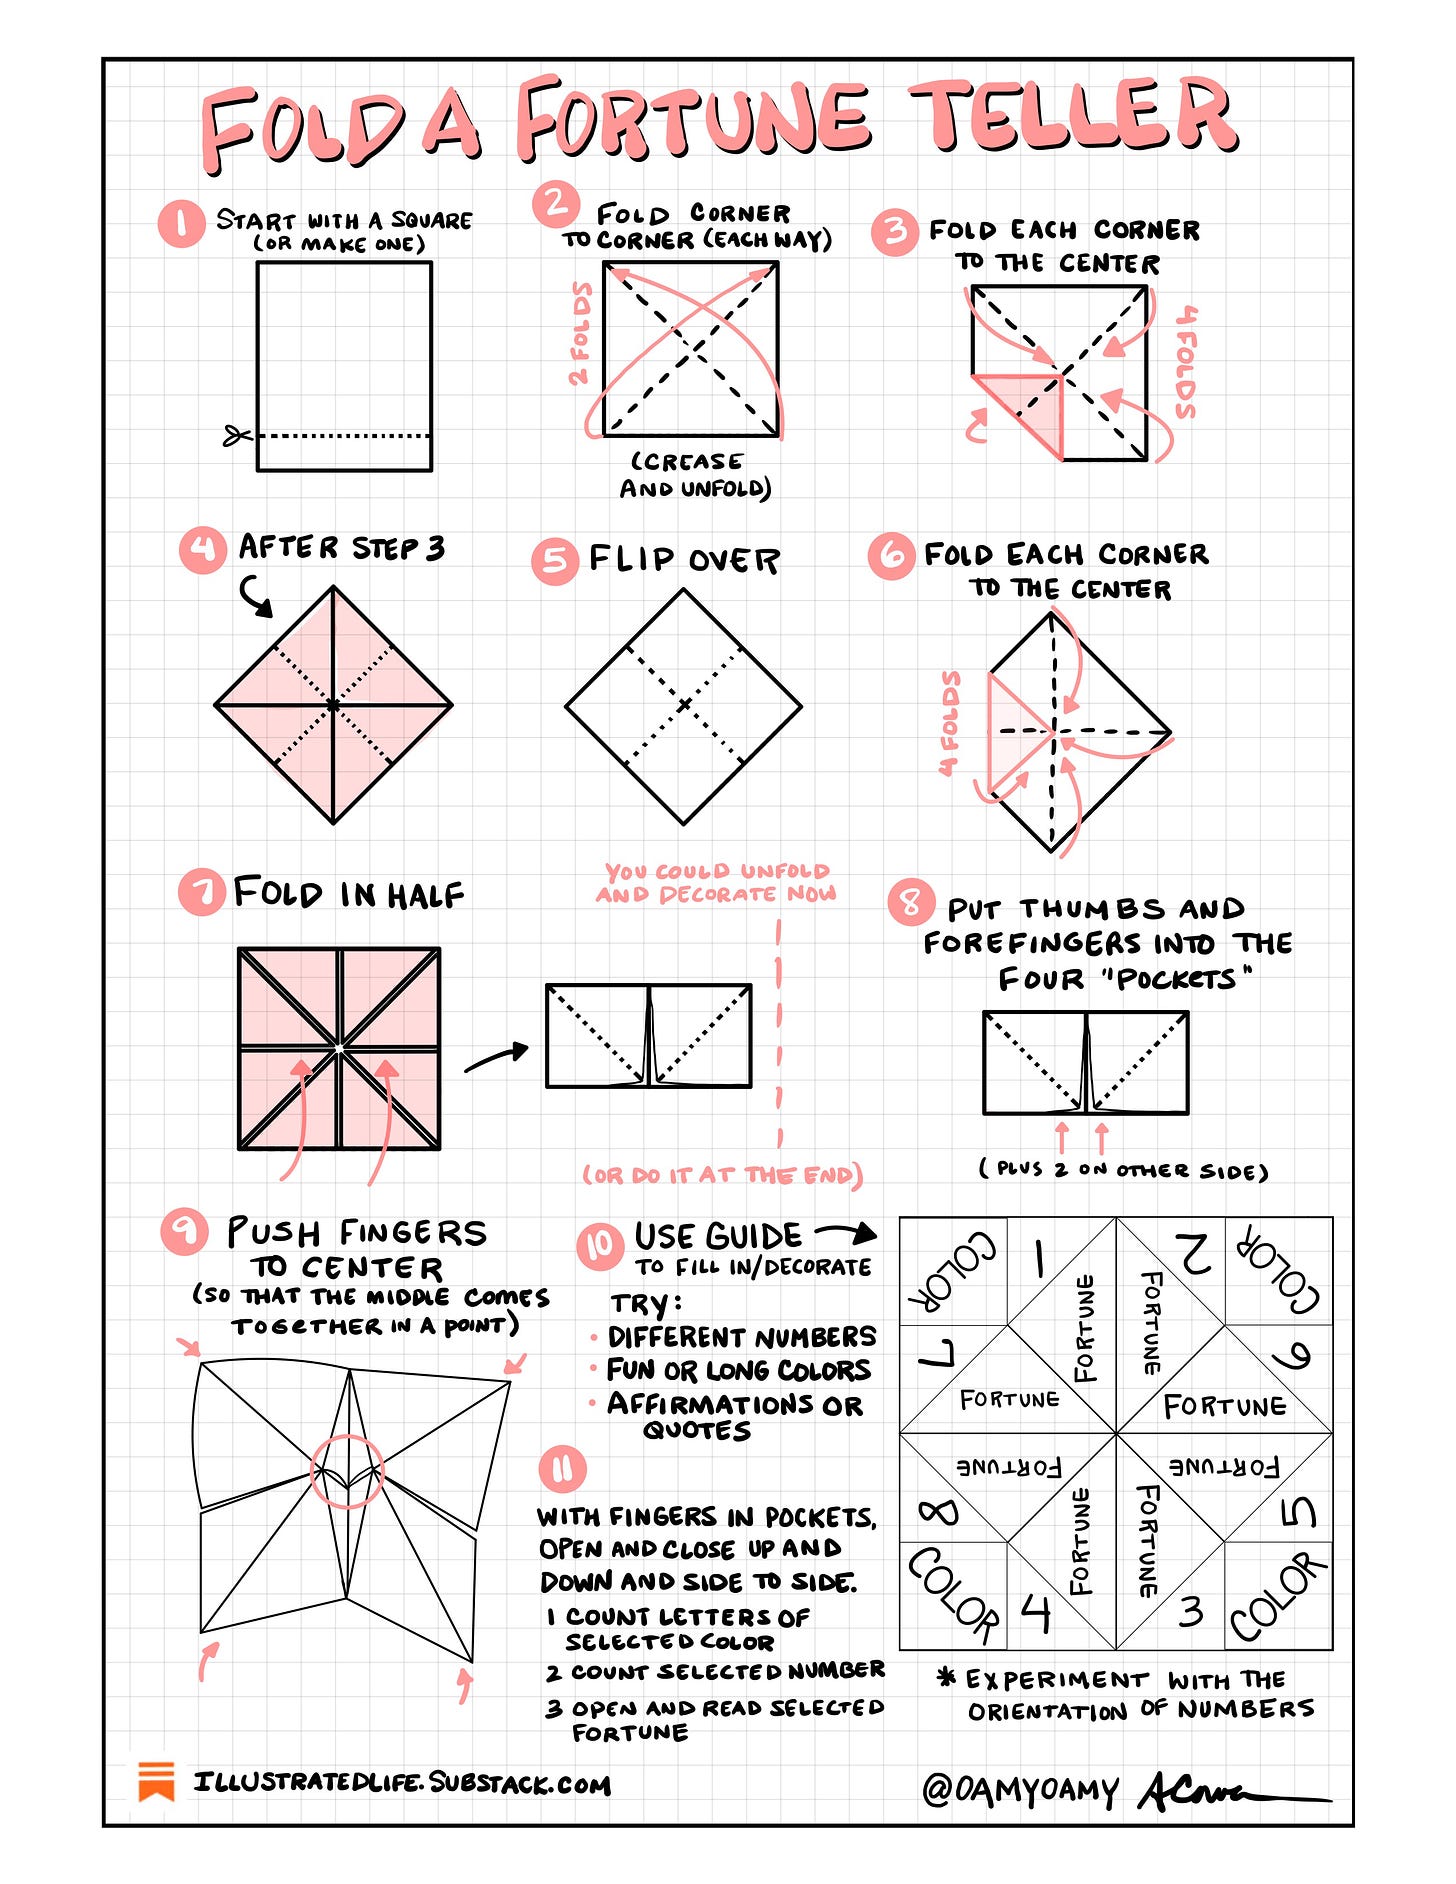 Fortune teller diagram folding directions 